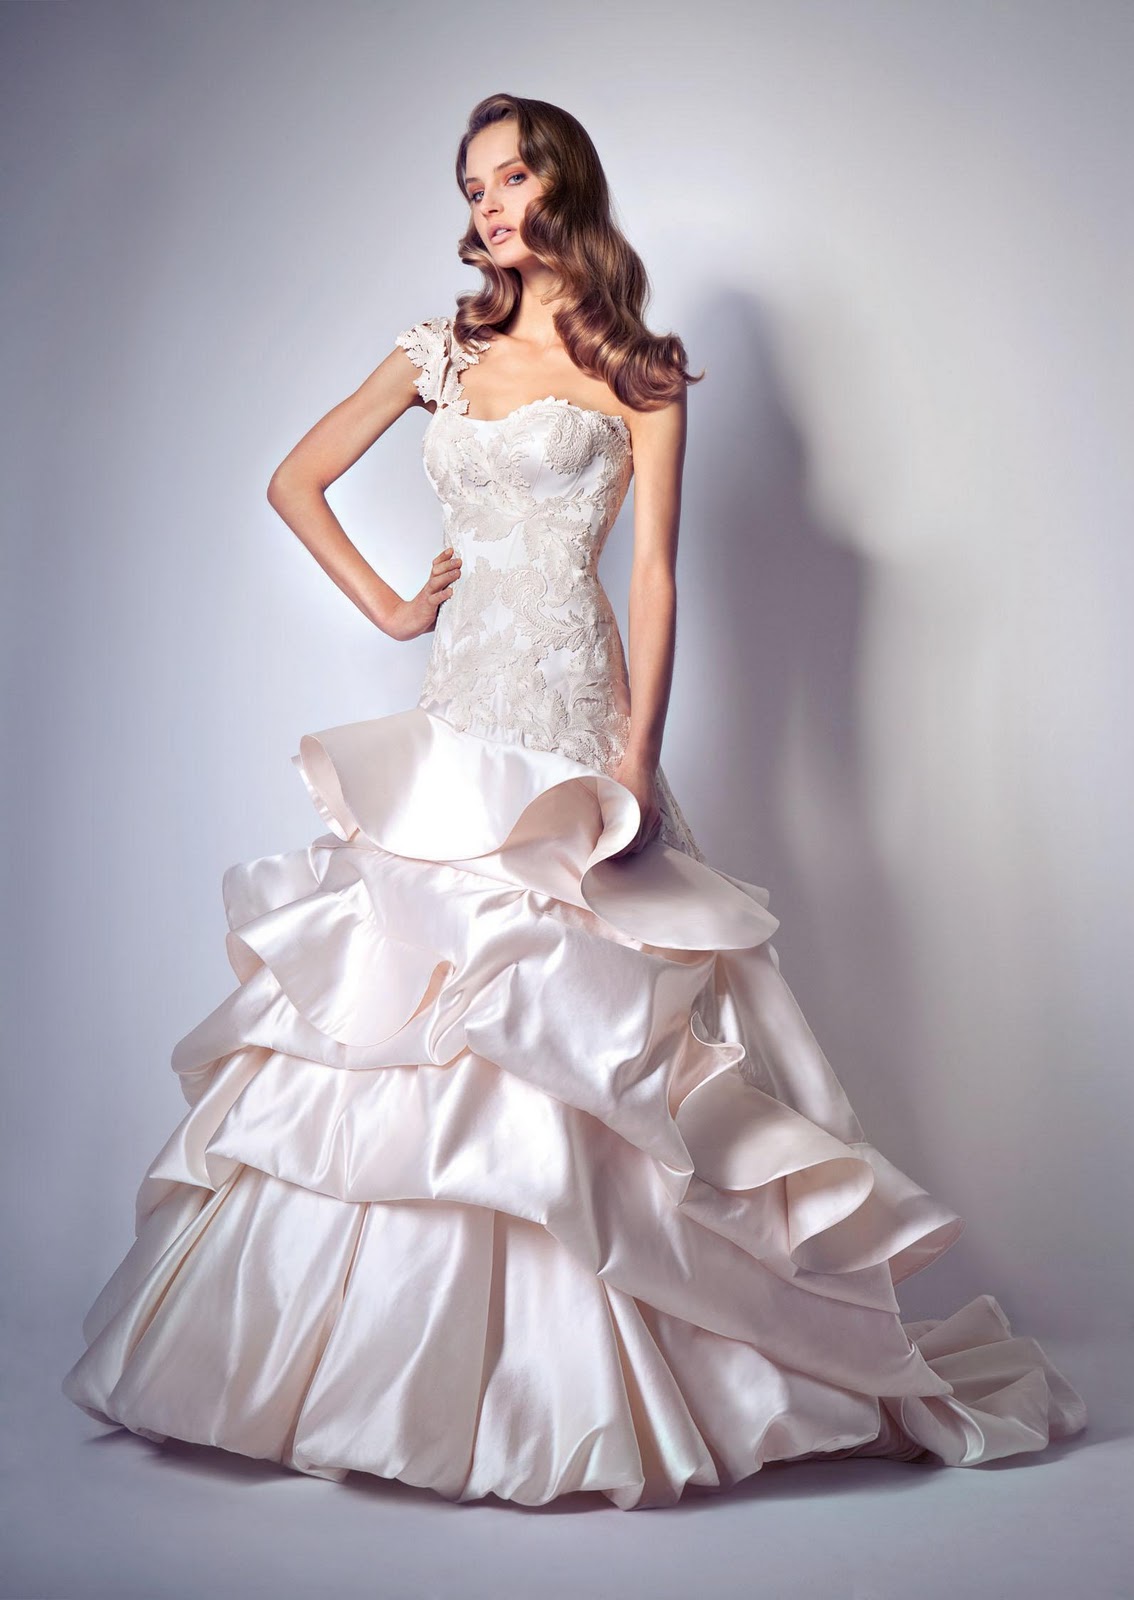 This Marina K bridal gown